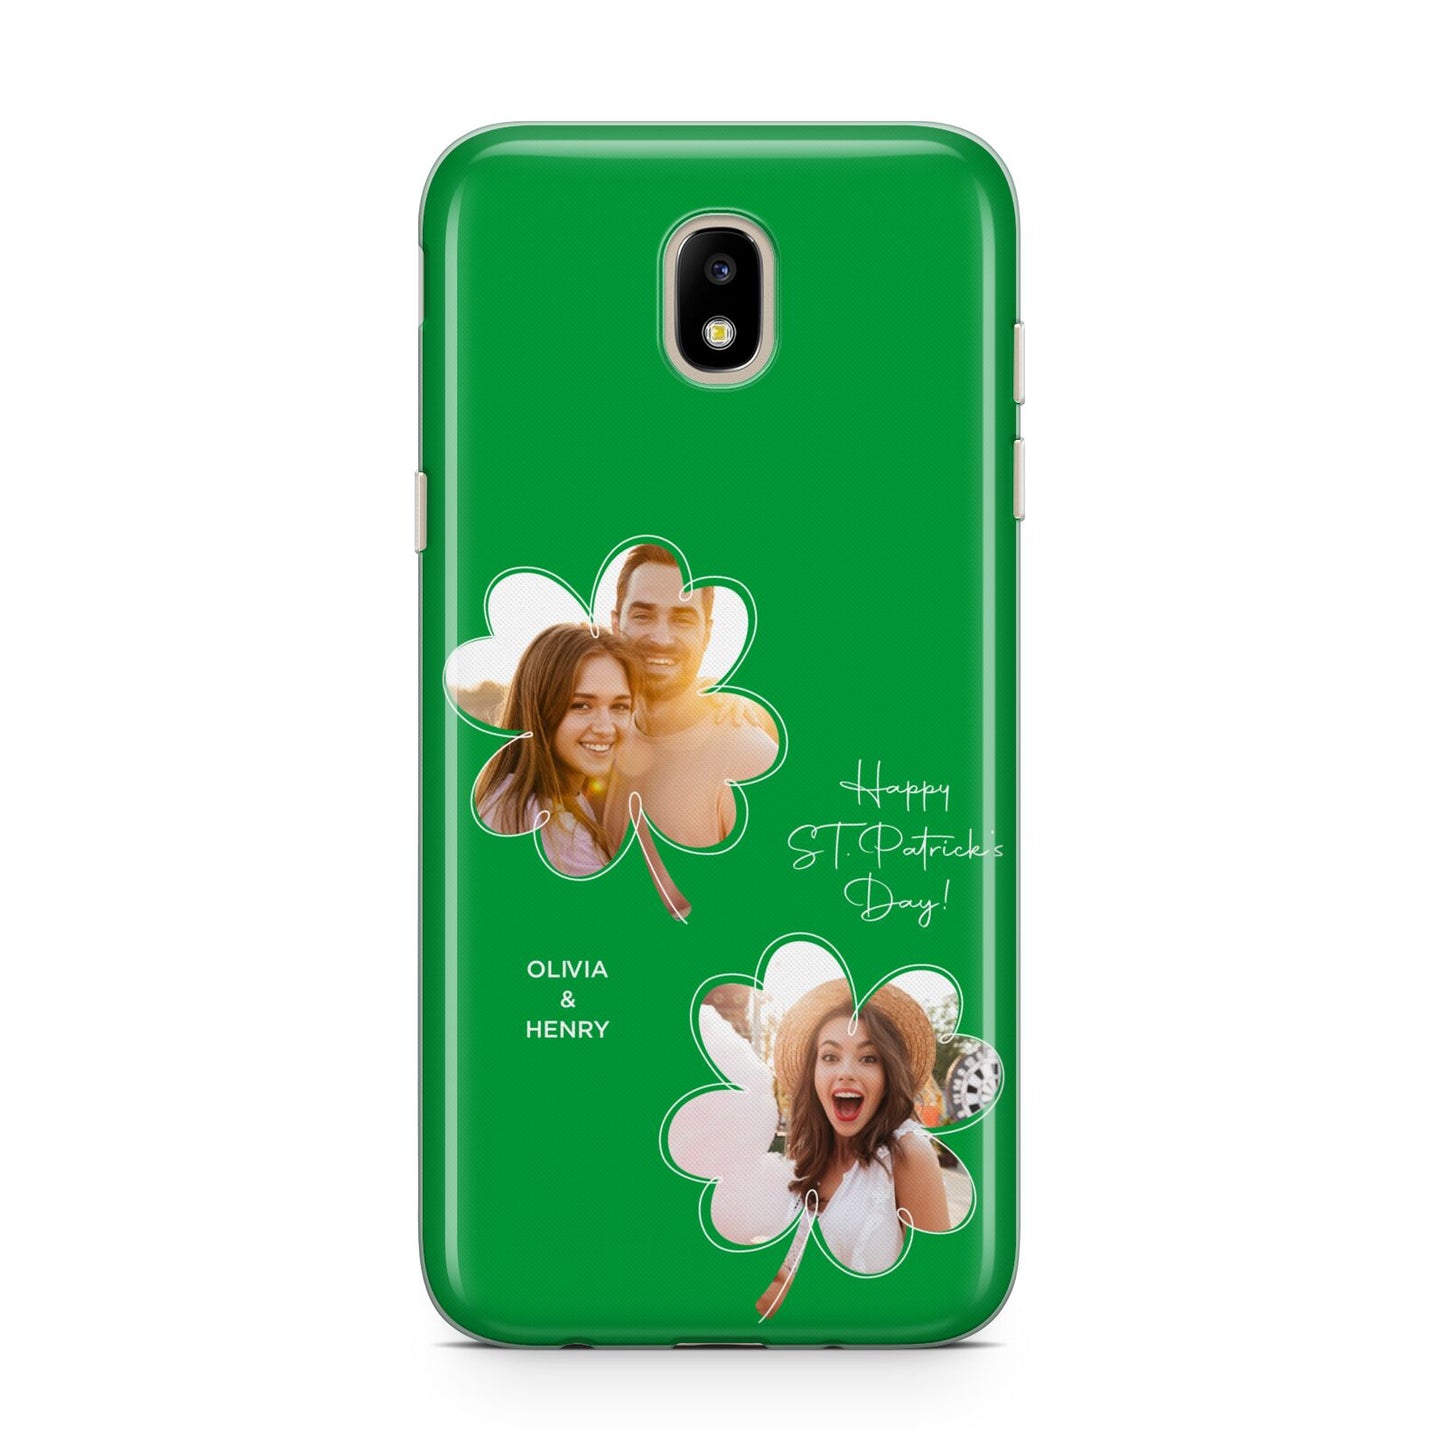 Personalised Photo St Patricks Day Samsung J5 2017 Case